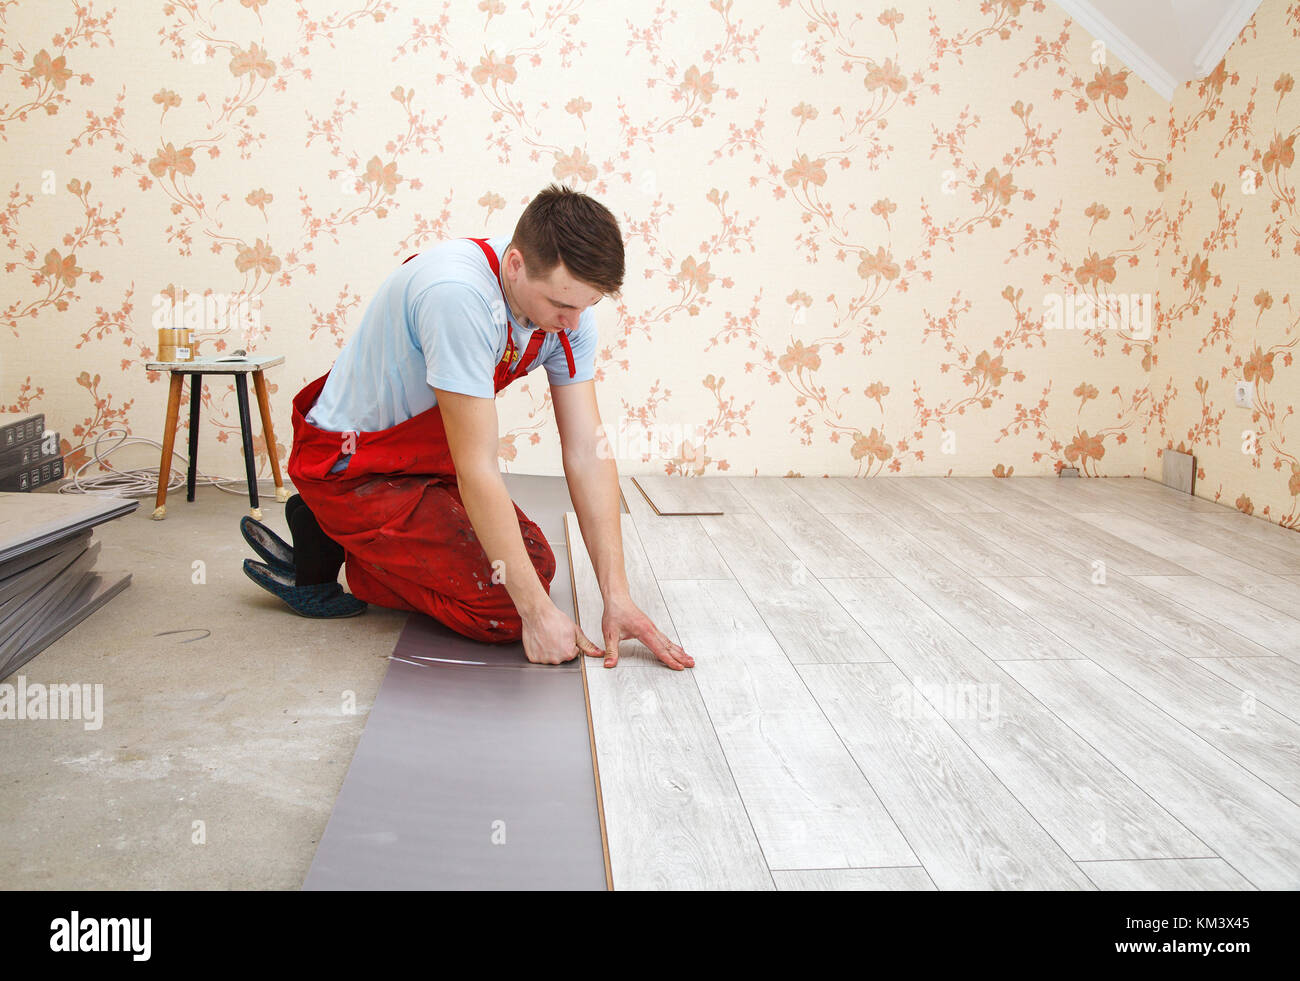 Handyman Laying Down Laminate Flooring Boards While Renovating A